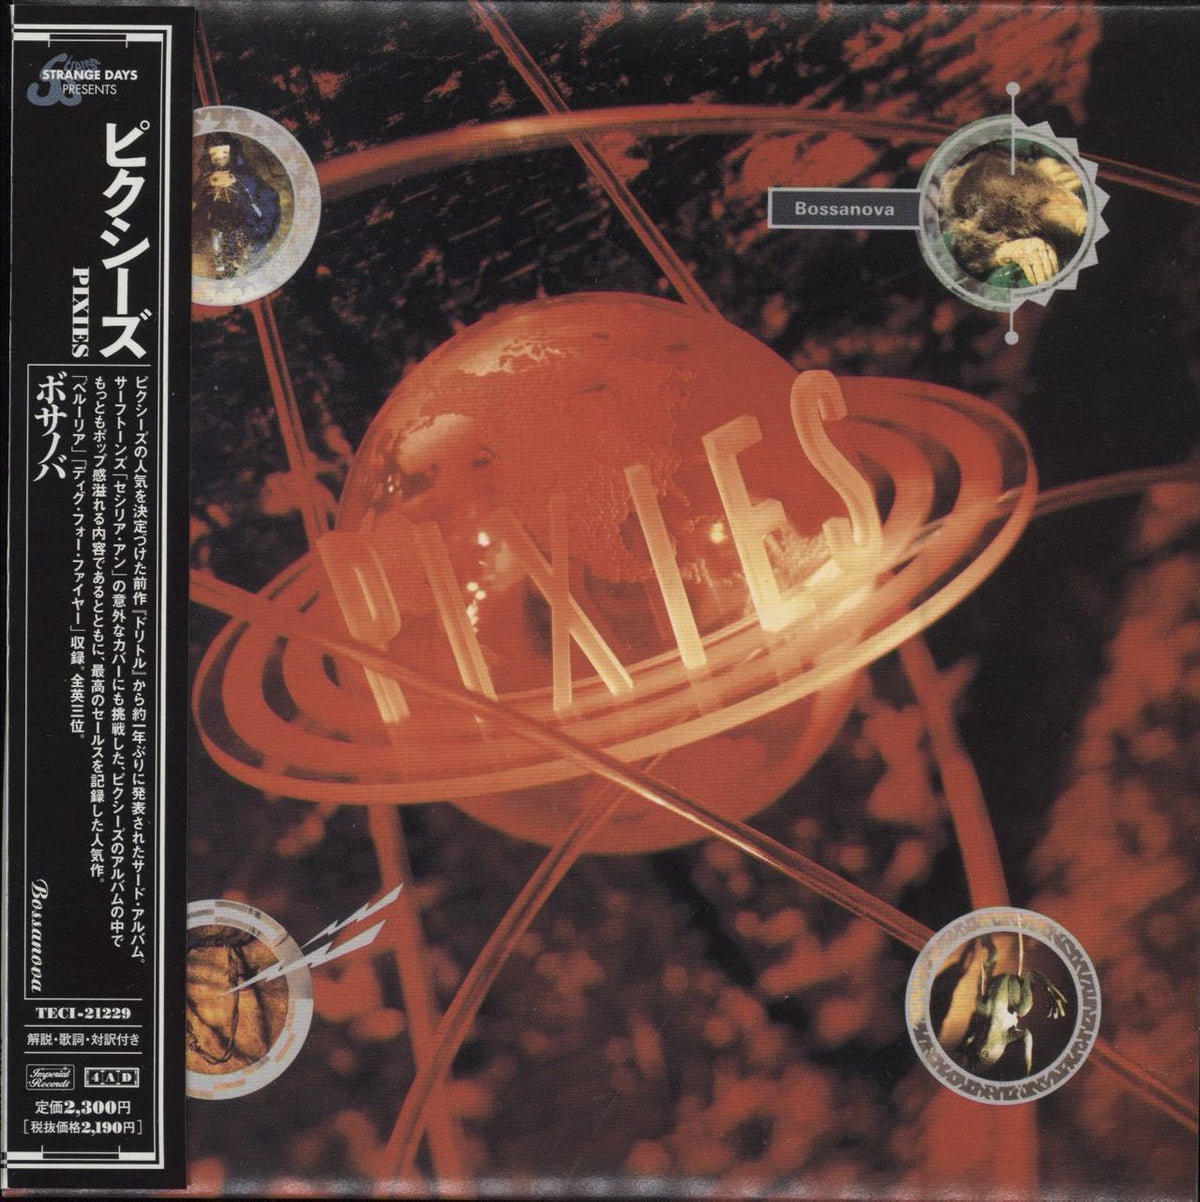 Pixies Bossanova Japanese Promo CD album